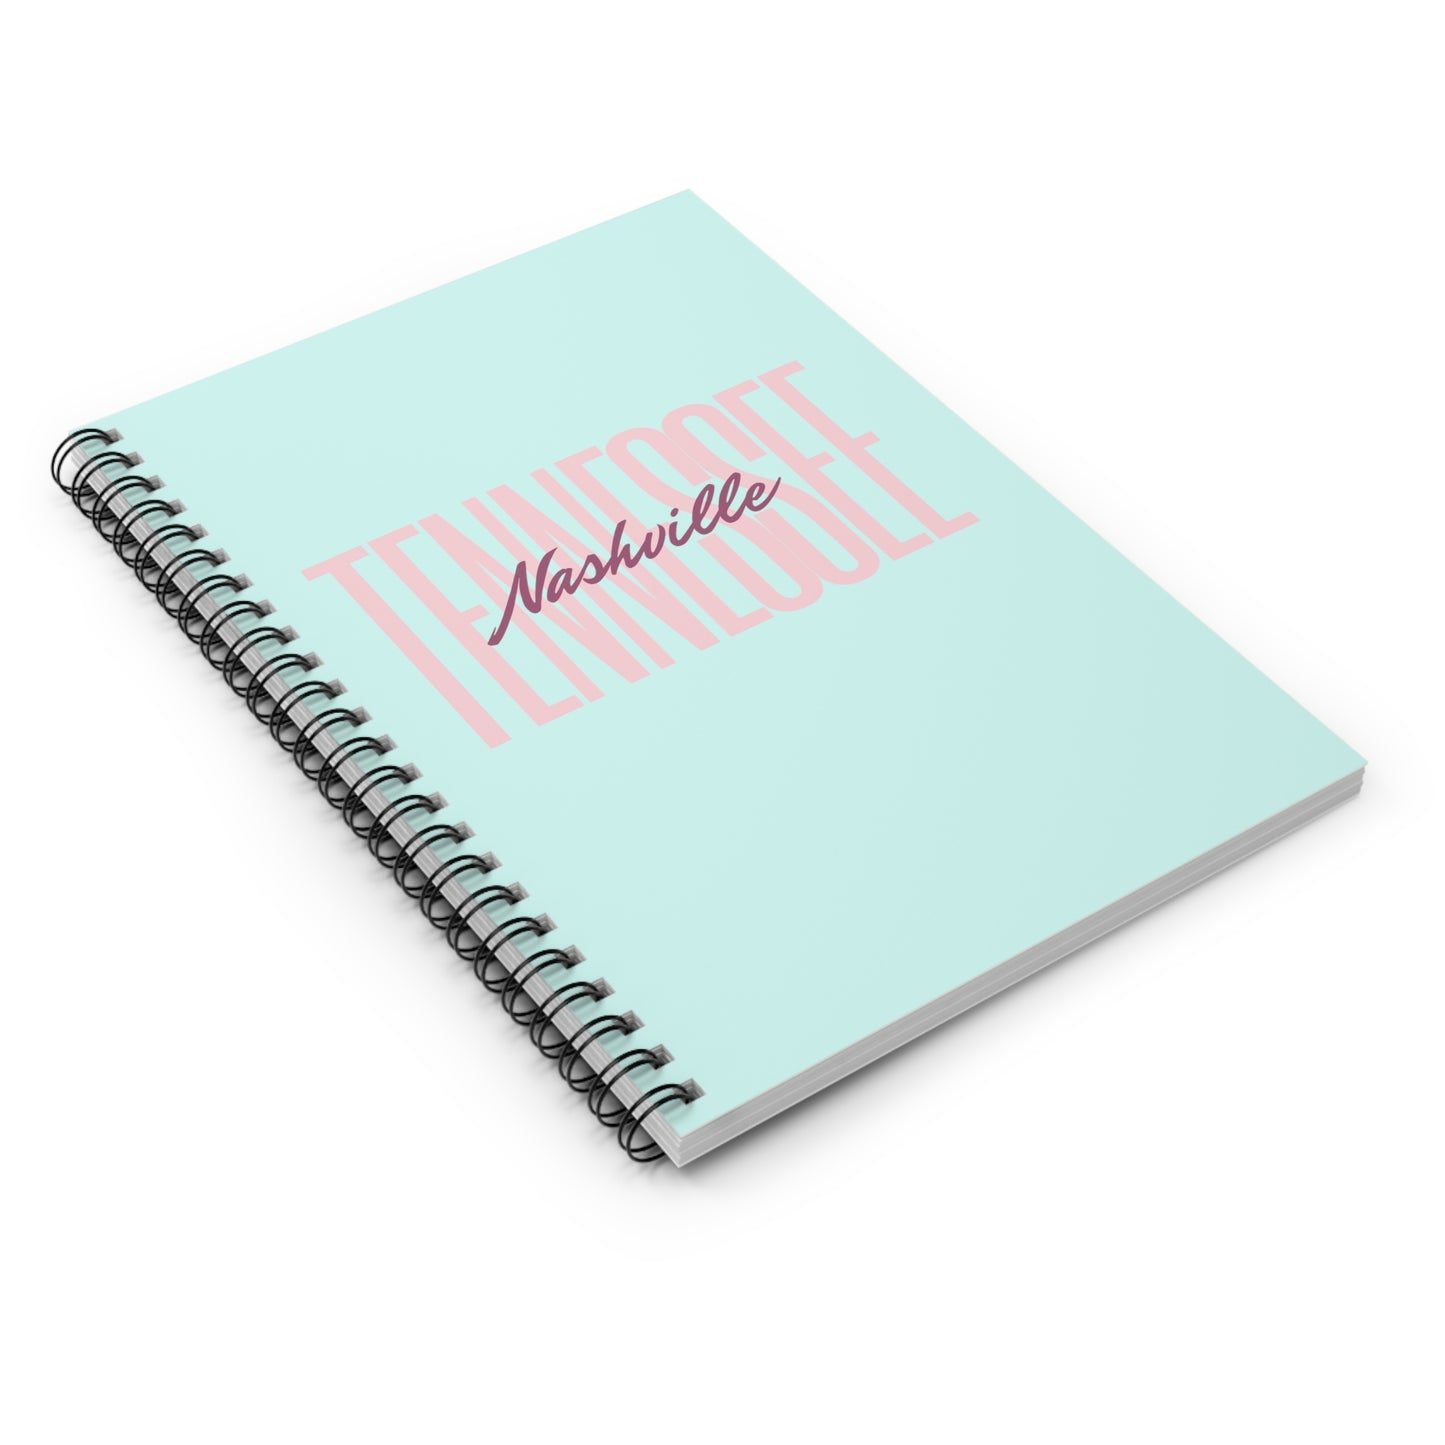 Nashville Notebook - Mint